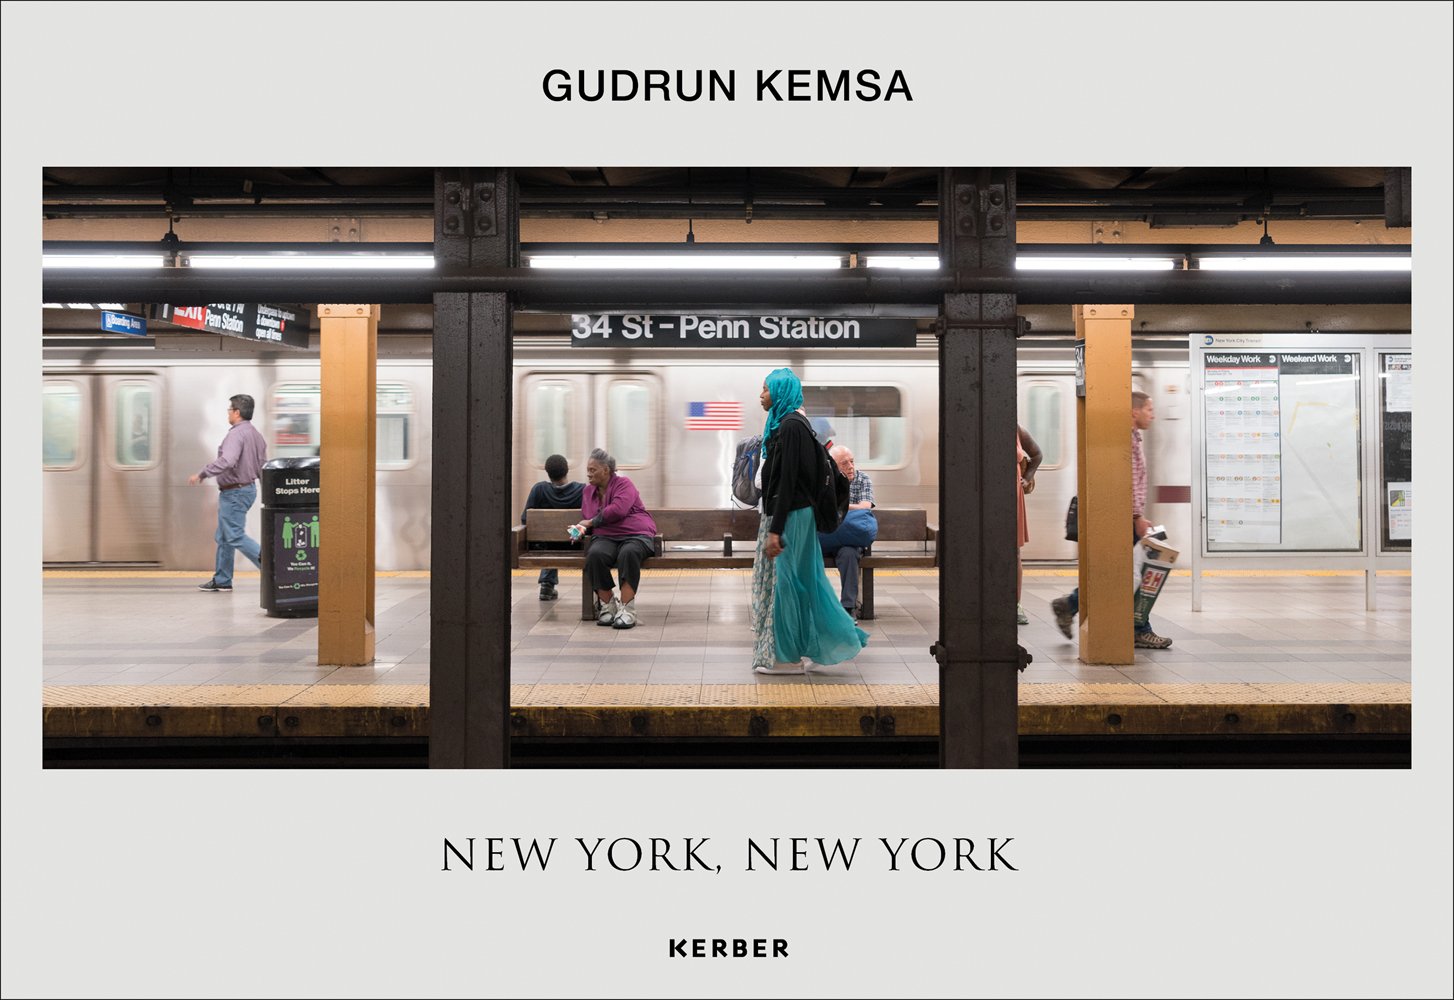 34th Street Penn subway station, commuters on platform, Gudrun Kemsa NEW YORK NEW YORK in black font on off white cover